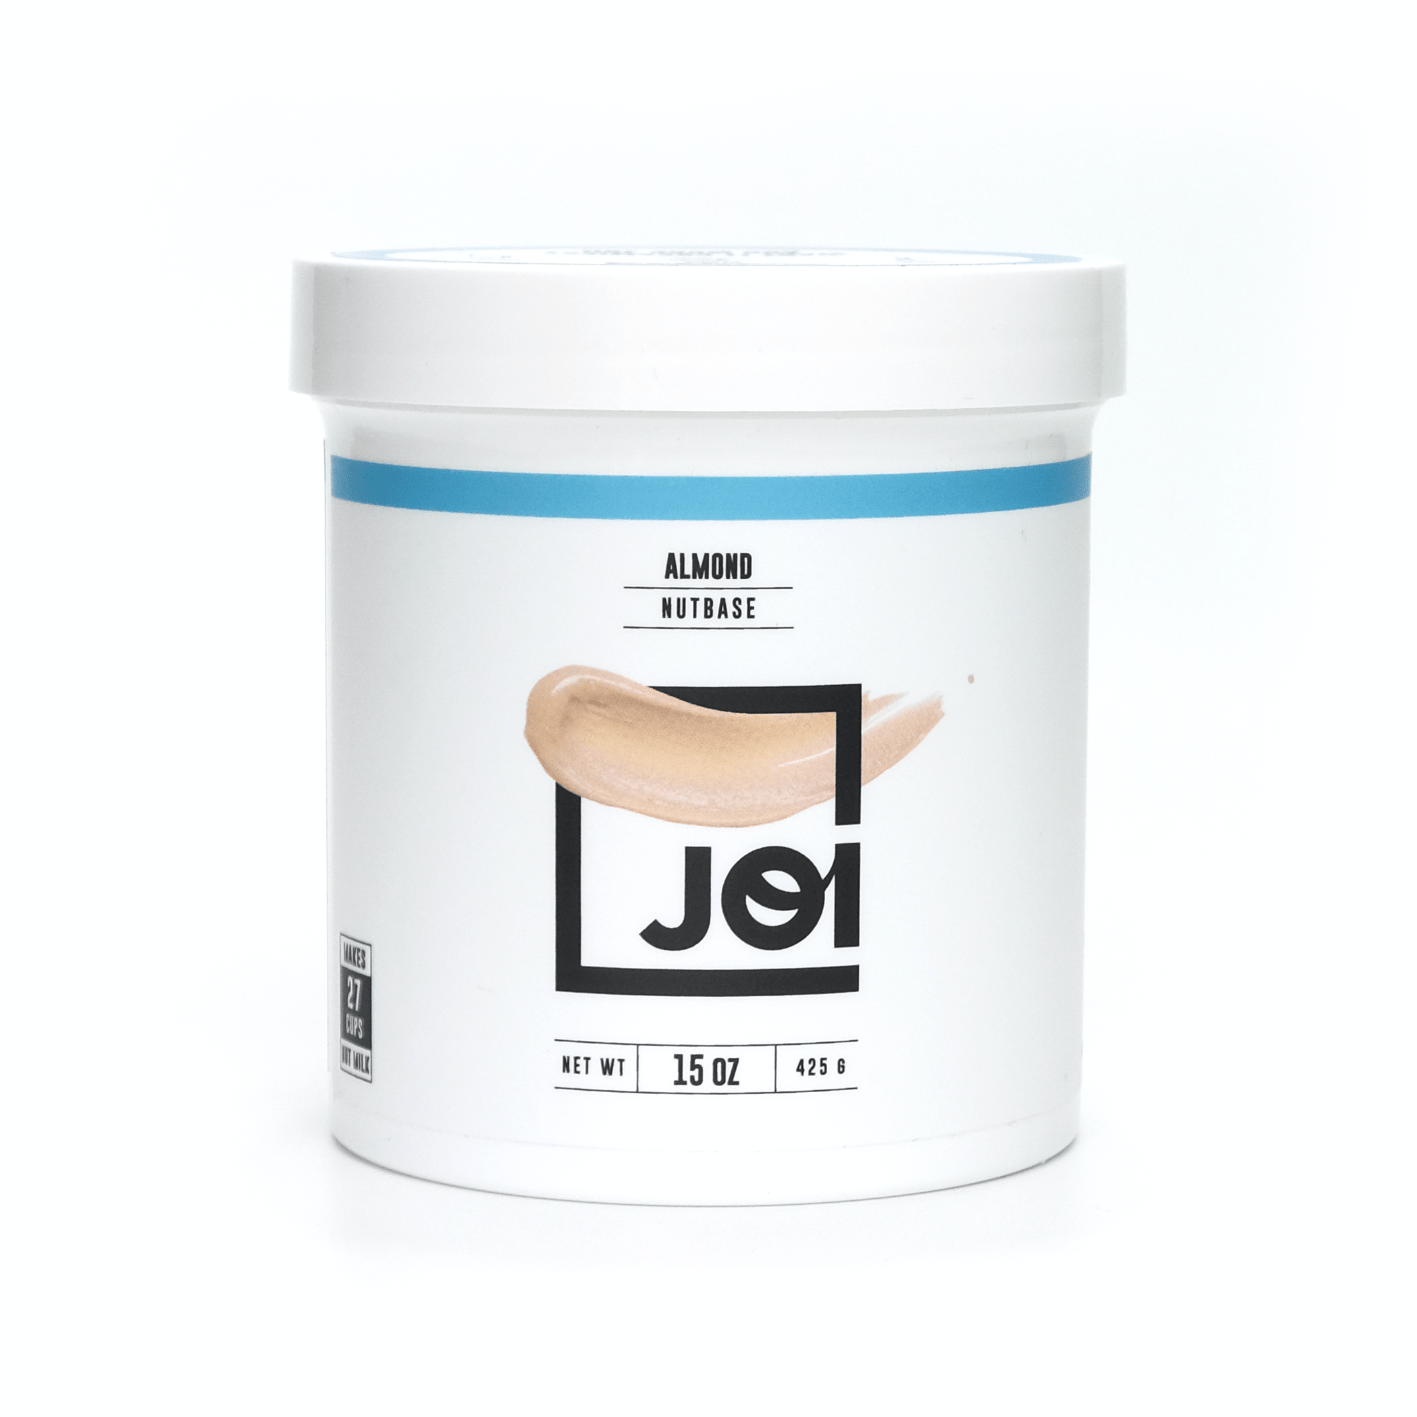 Yogurt JOI Nut Milk - Almond